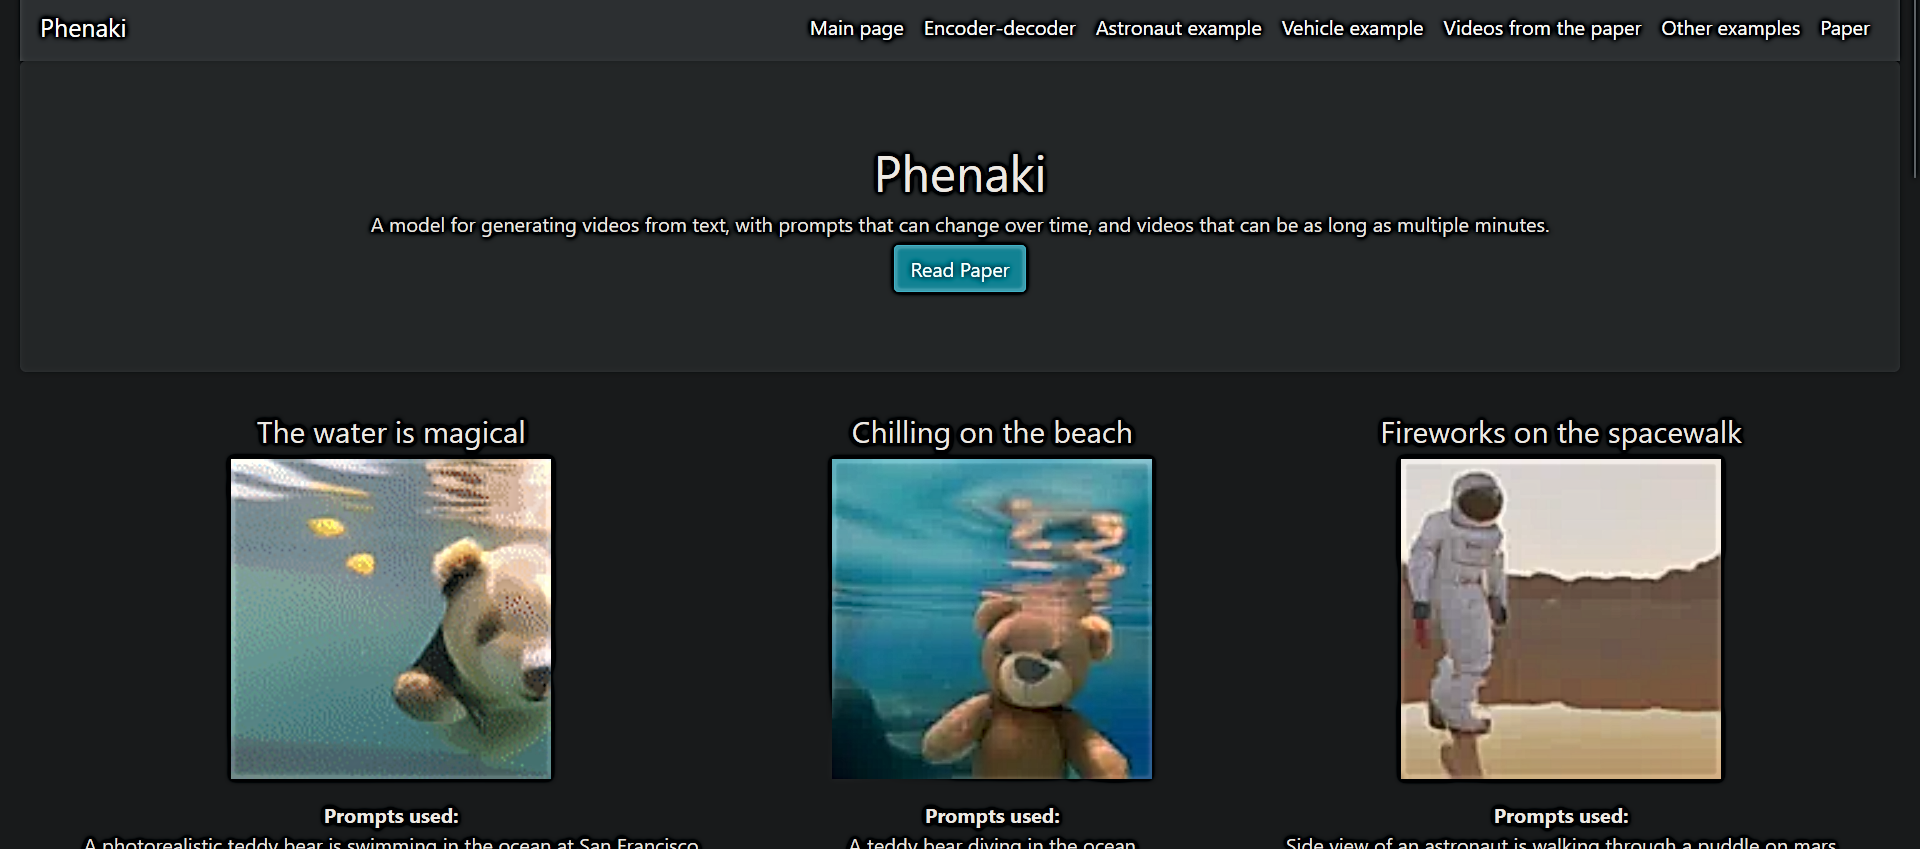 Phenaki featured